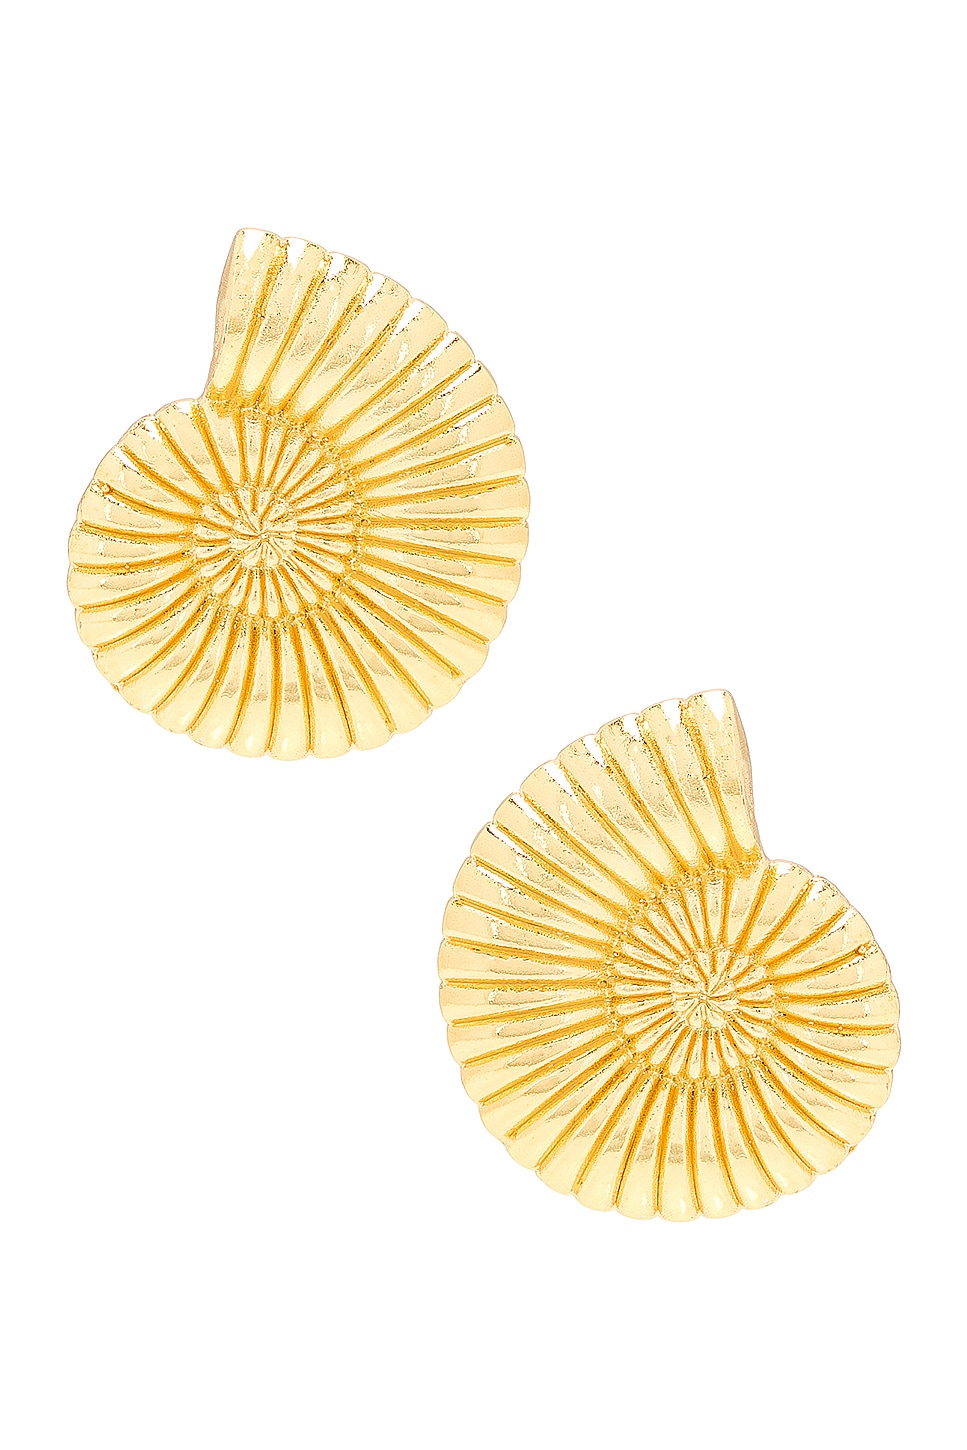 Image 1 of Jordan Road Jewelry Vintage Shell Earrings in 18k Gold Plated Brass